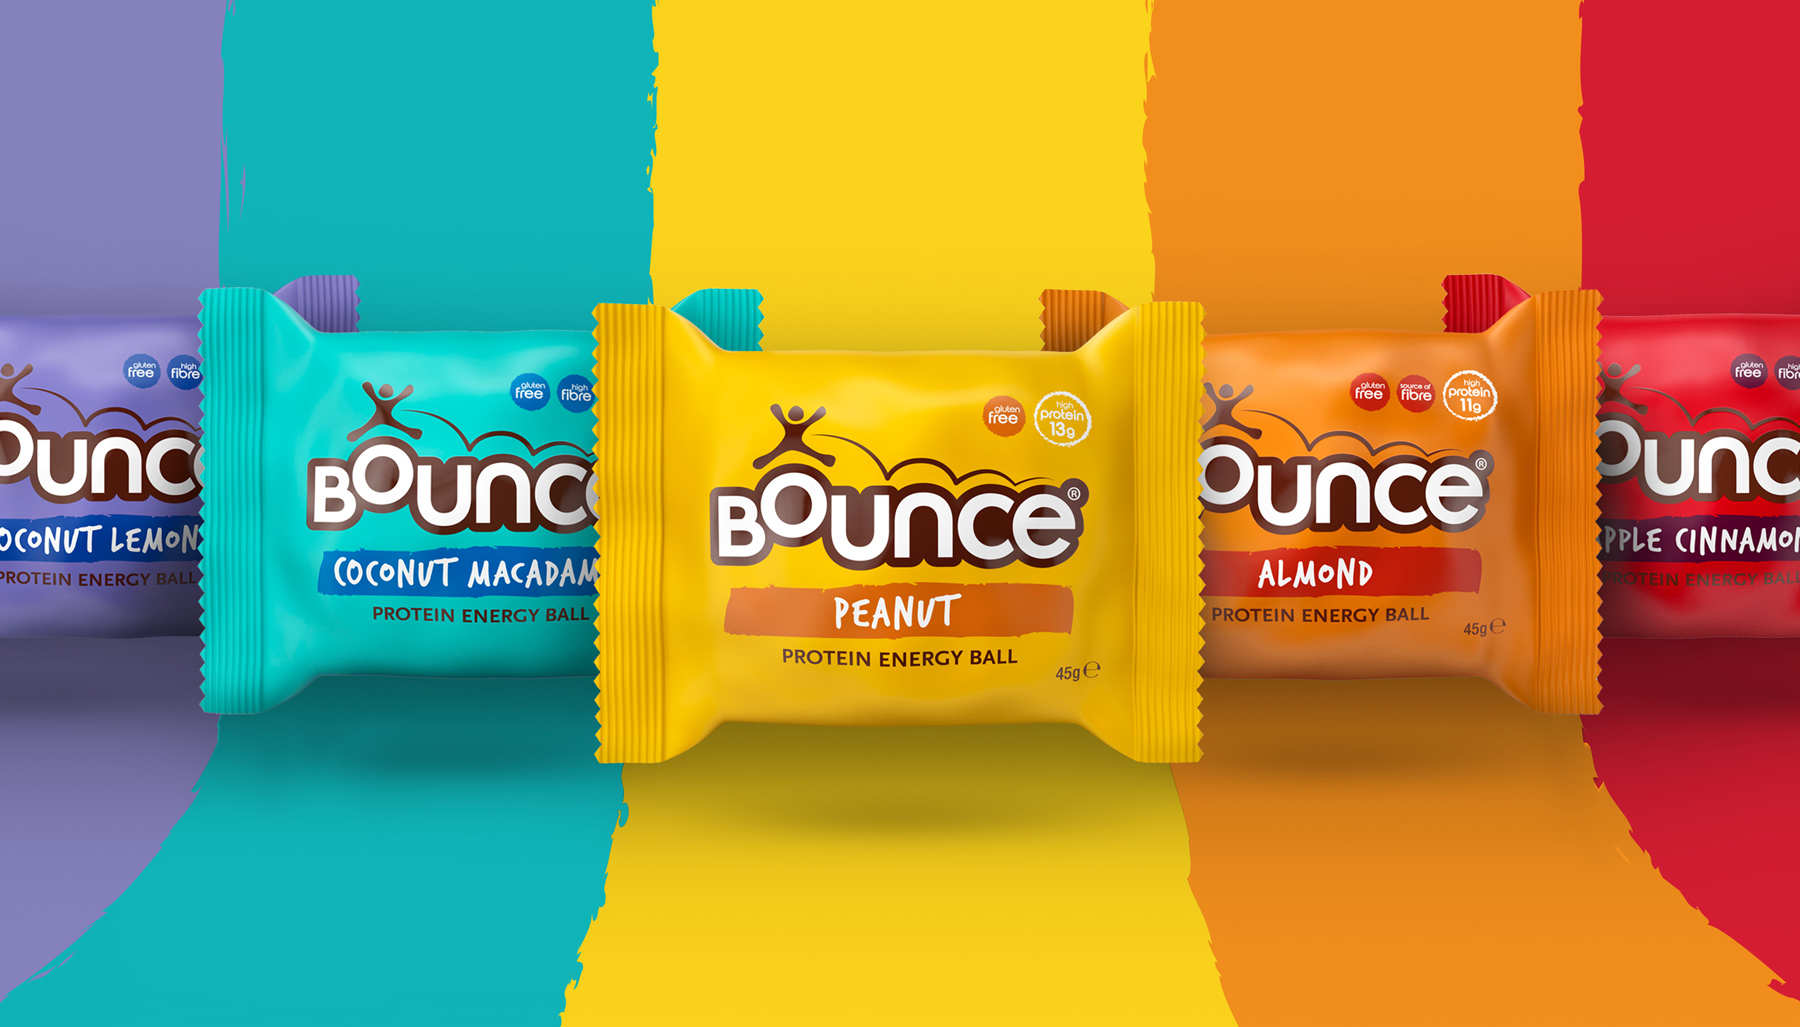 Award-winning packaging design for Bounce product range